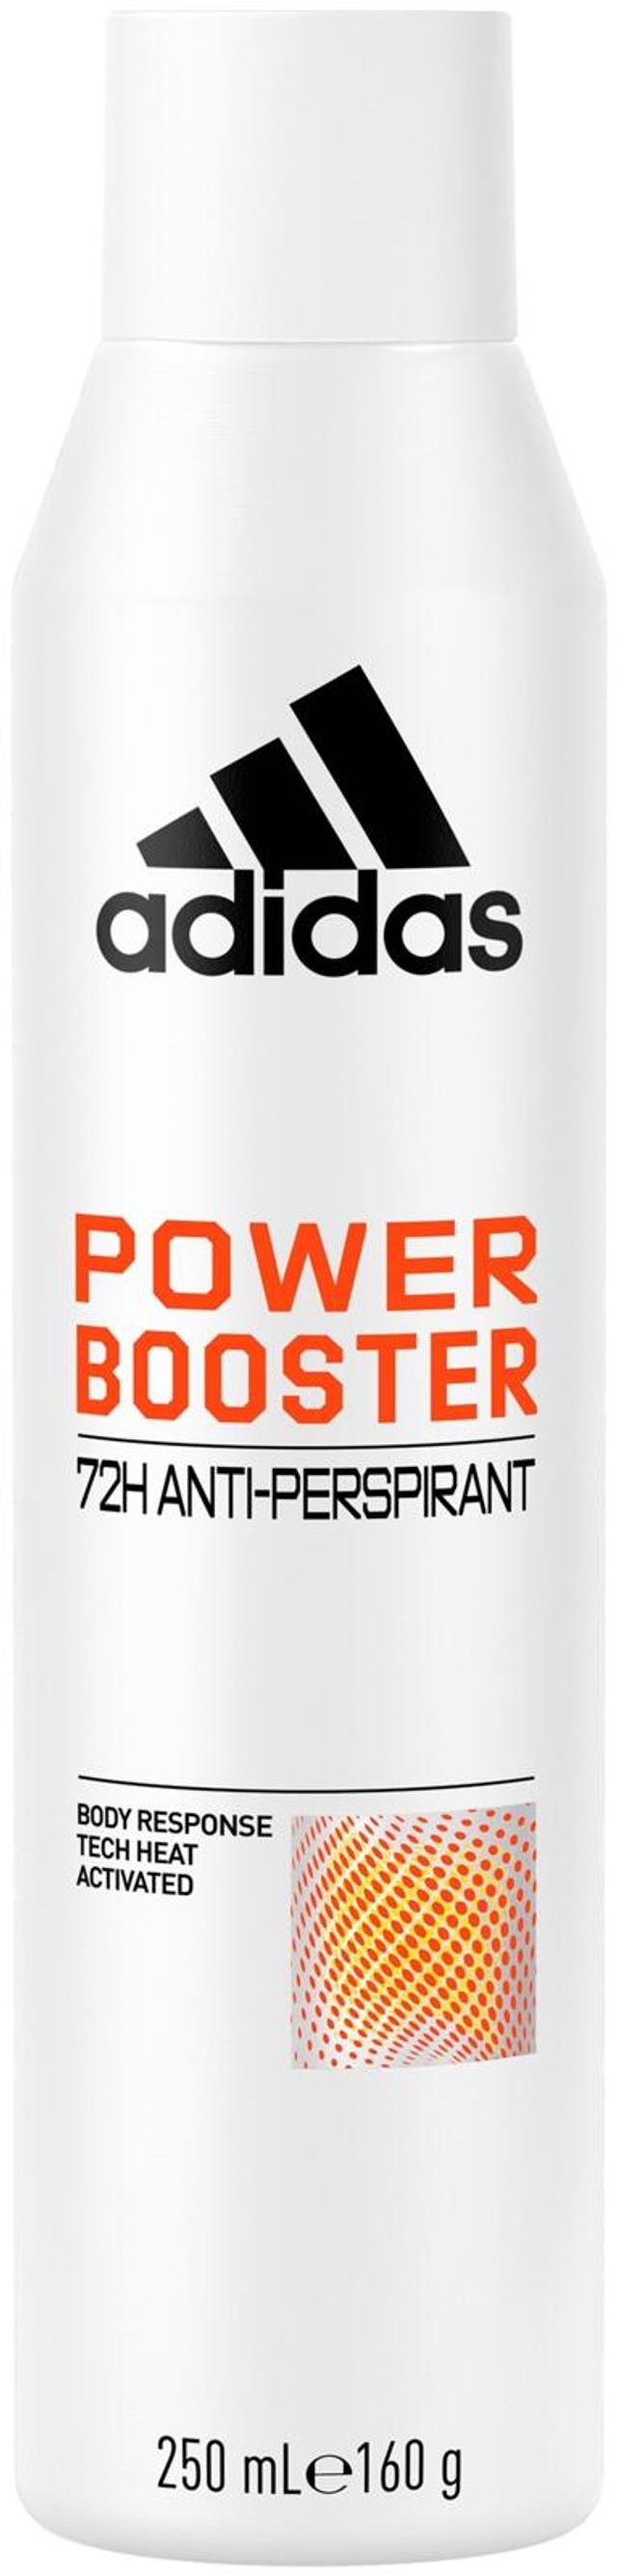 Adidas Power Booster Anti-Perspirant spray women 150 ml, naisille